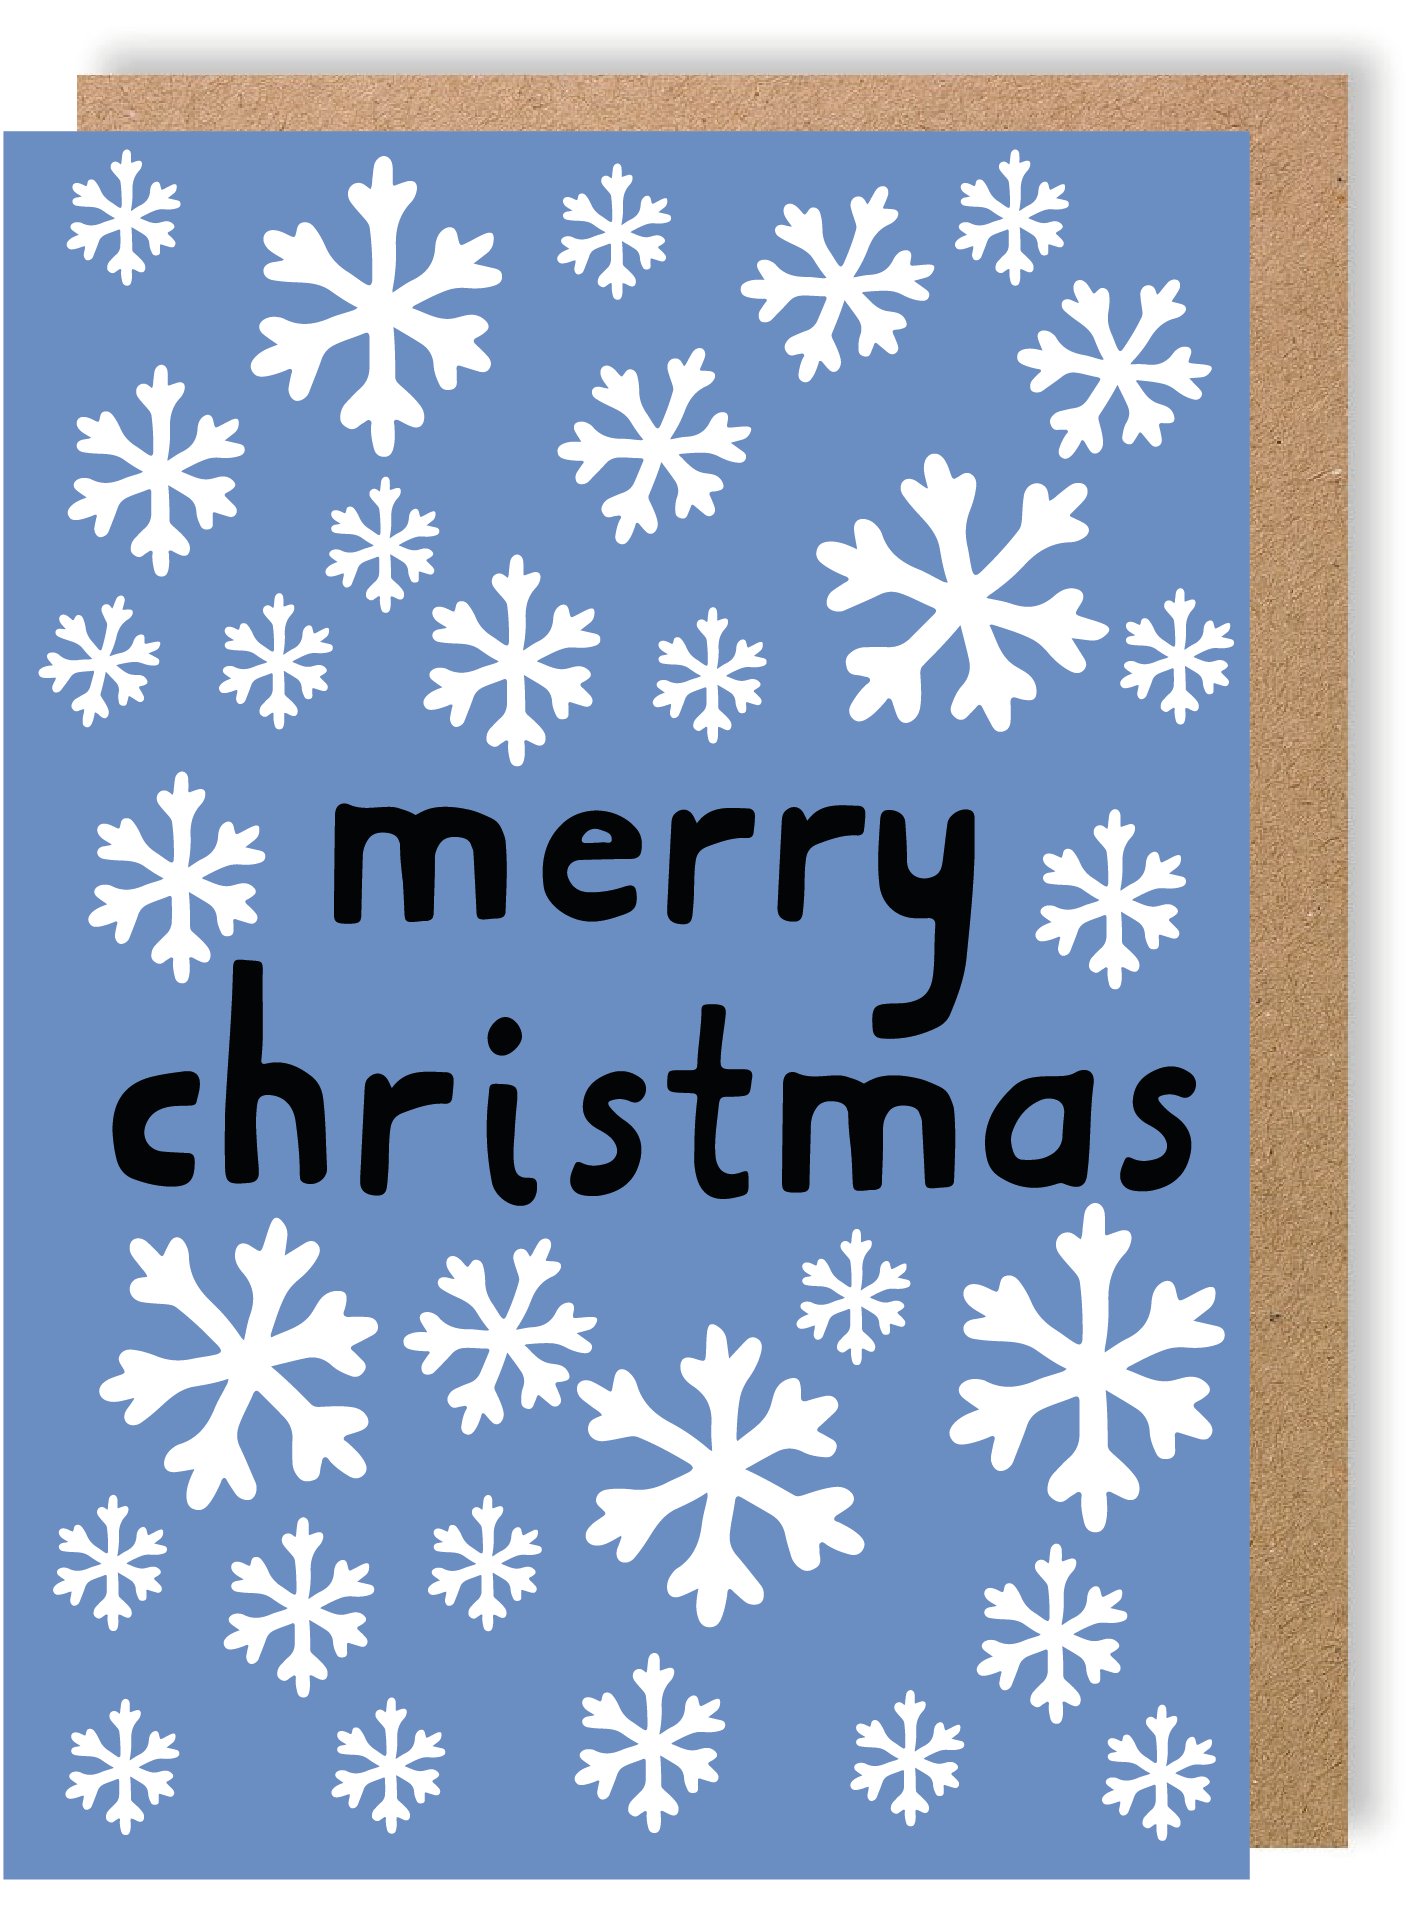 Merry Christmas -Snowflakes - Christmas - Greetings Card - LukeHorton Art